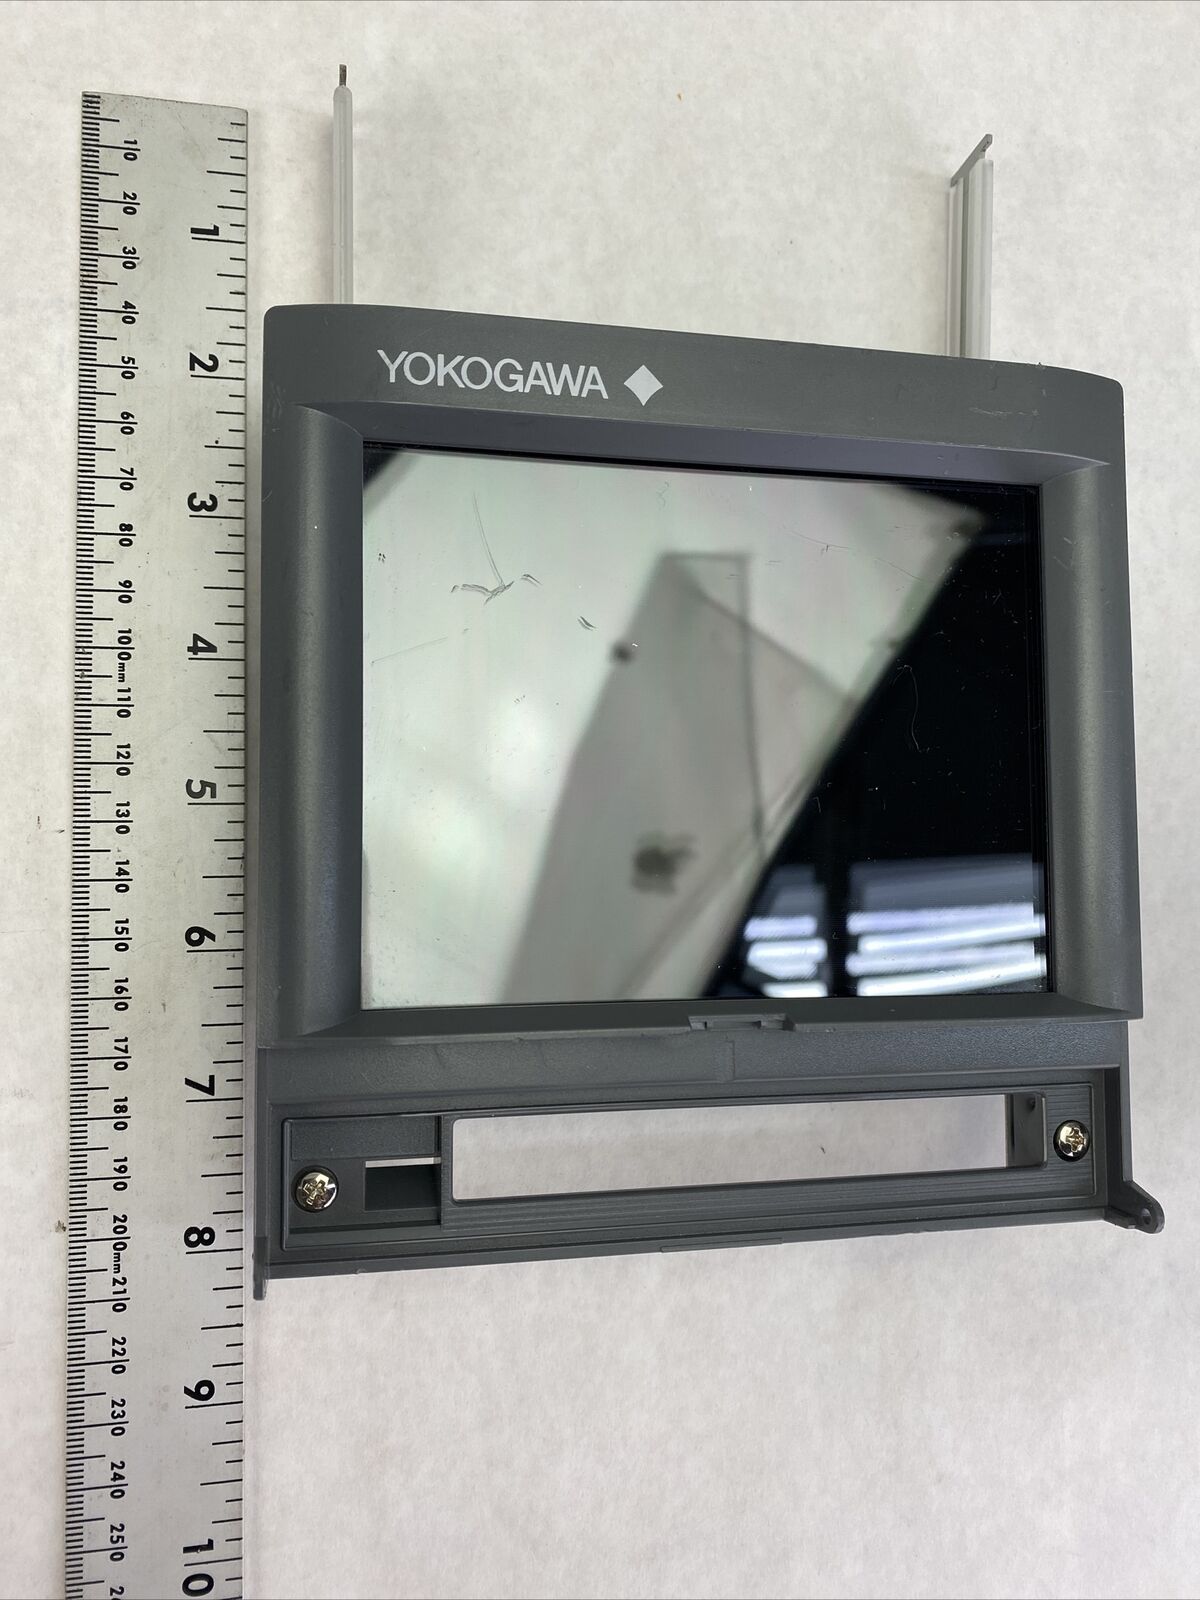 Yokogawa 5.5" LCD Screen Component for Chart Recorder